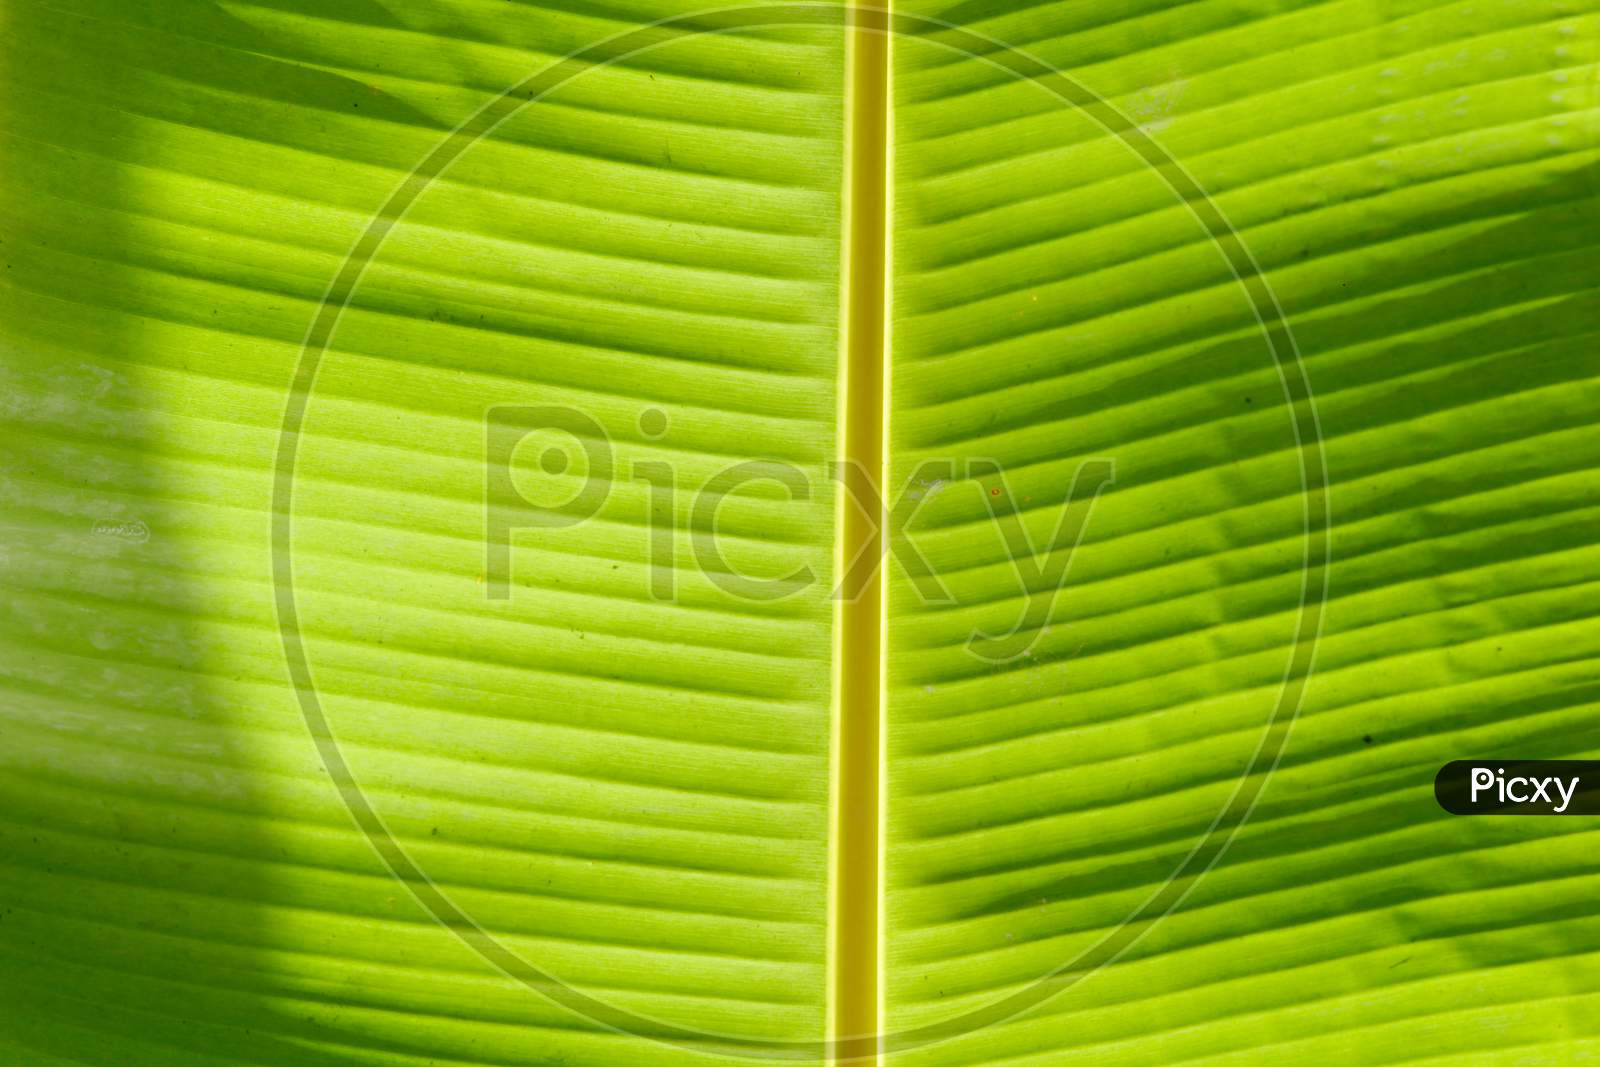 A Symmetric Green Banana Leaf Texture Glowing In Sun